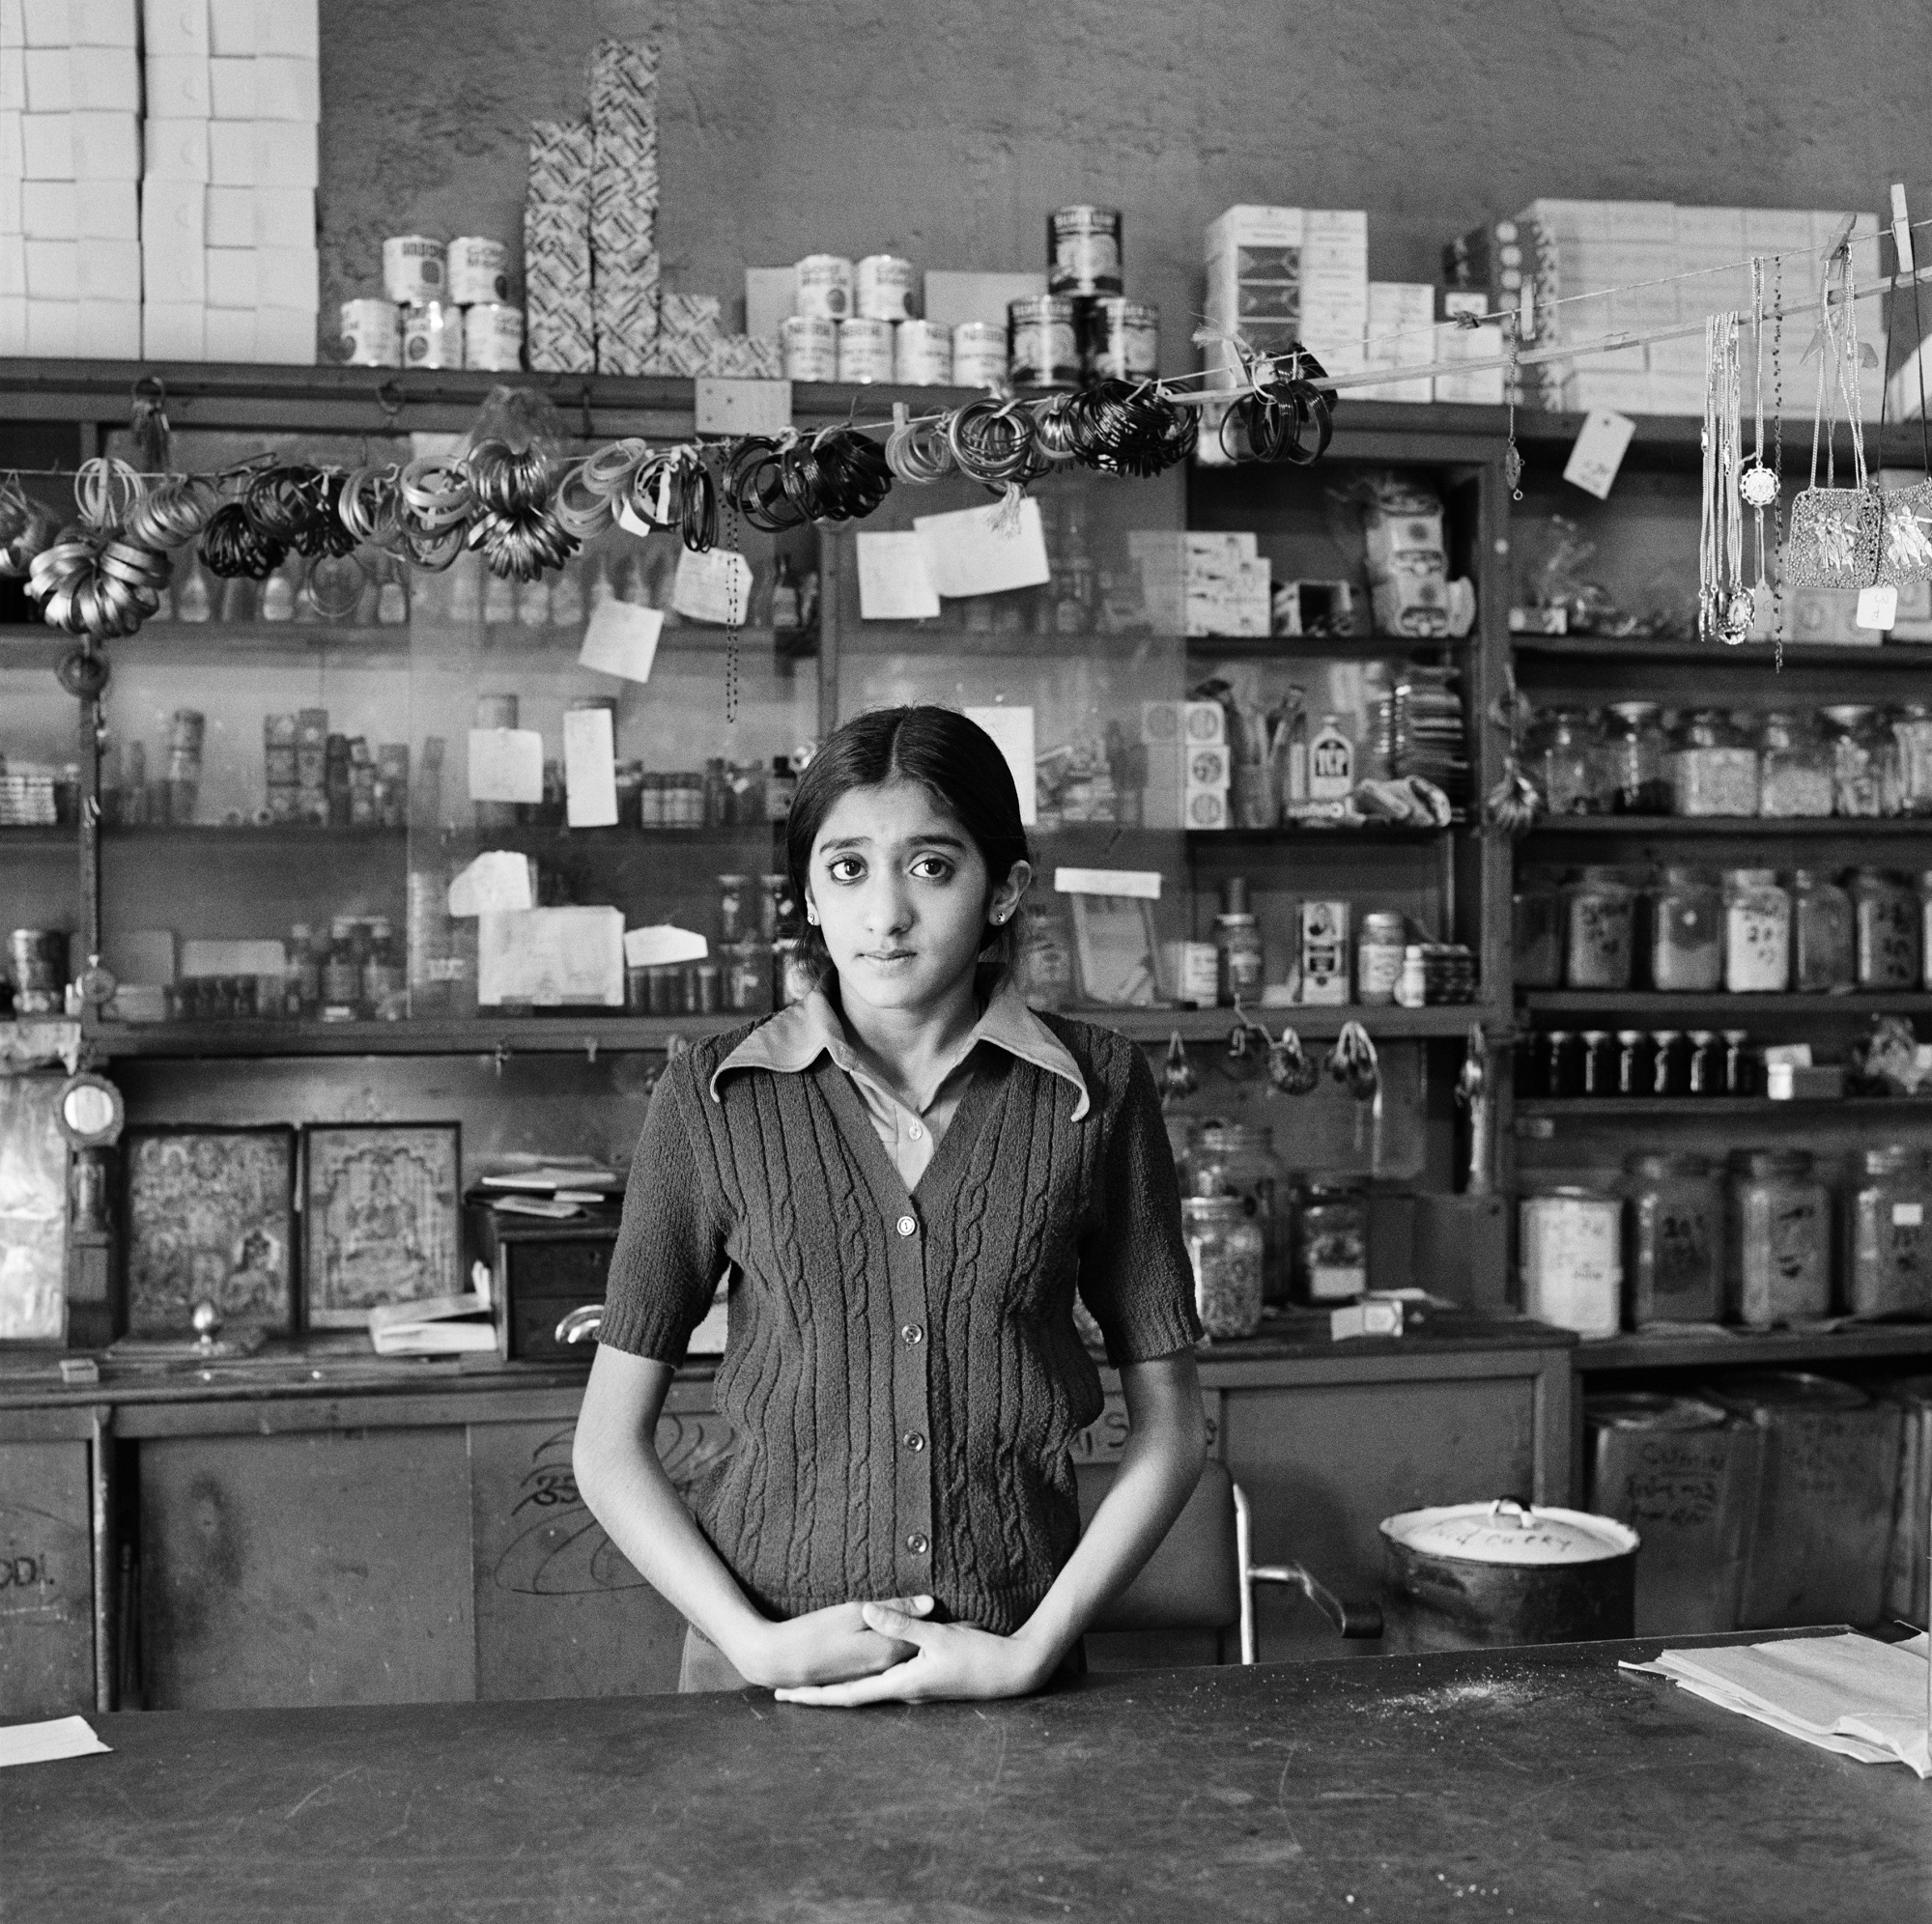 Yaksha Modi, daughter of Chagan Modi, in her father's shop before its destruction under the Group Areas Act, 17th Street, Fietas, Johannesburg, 1976 [Photograph by David Goldblatt]